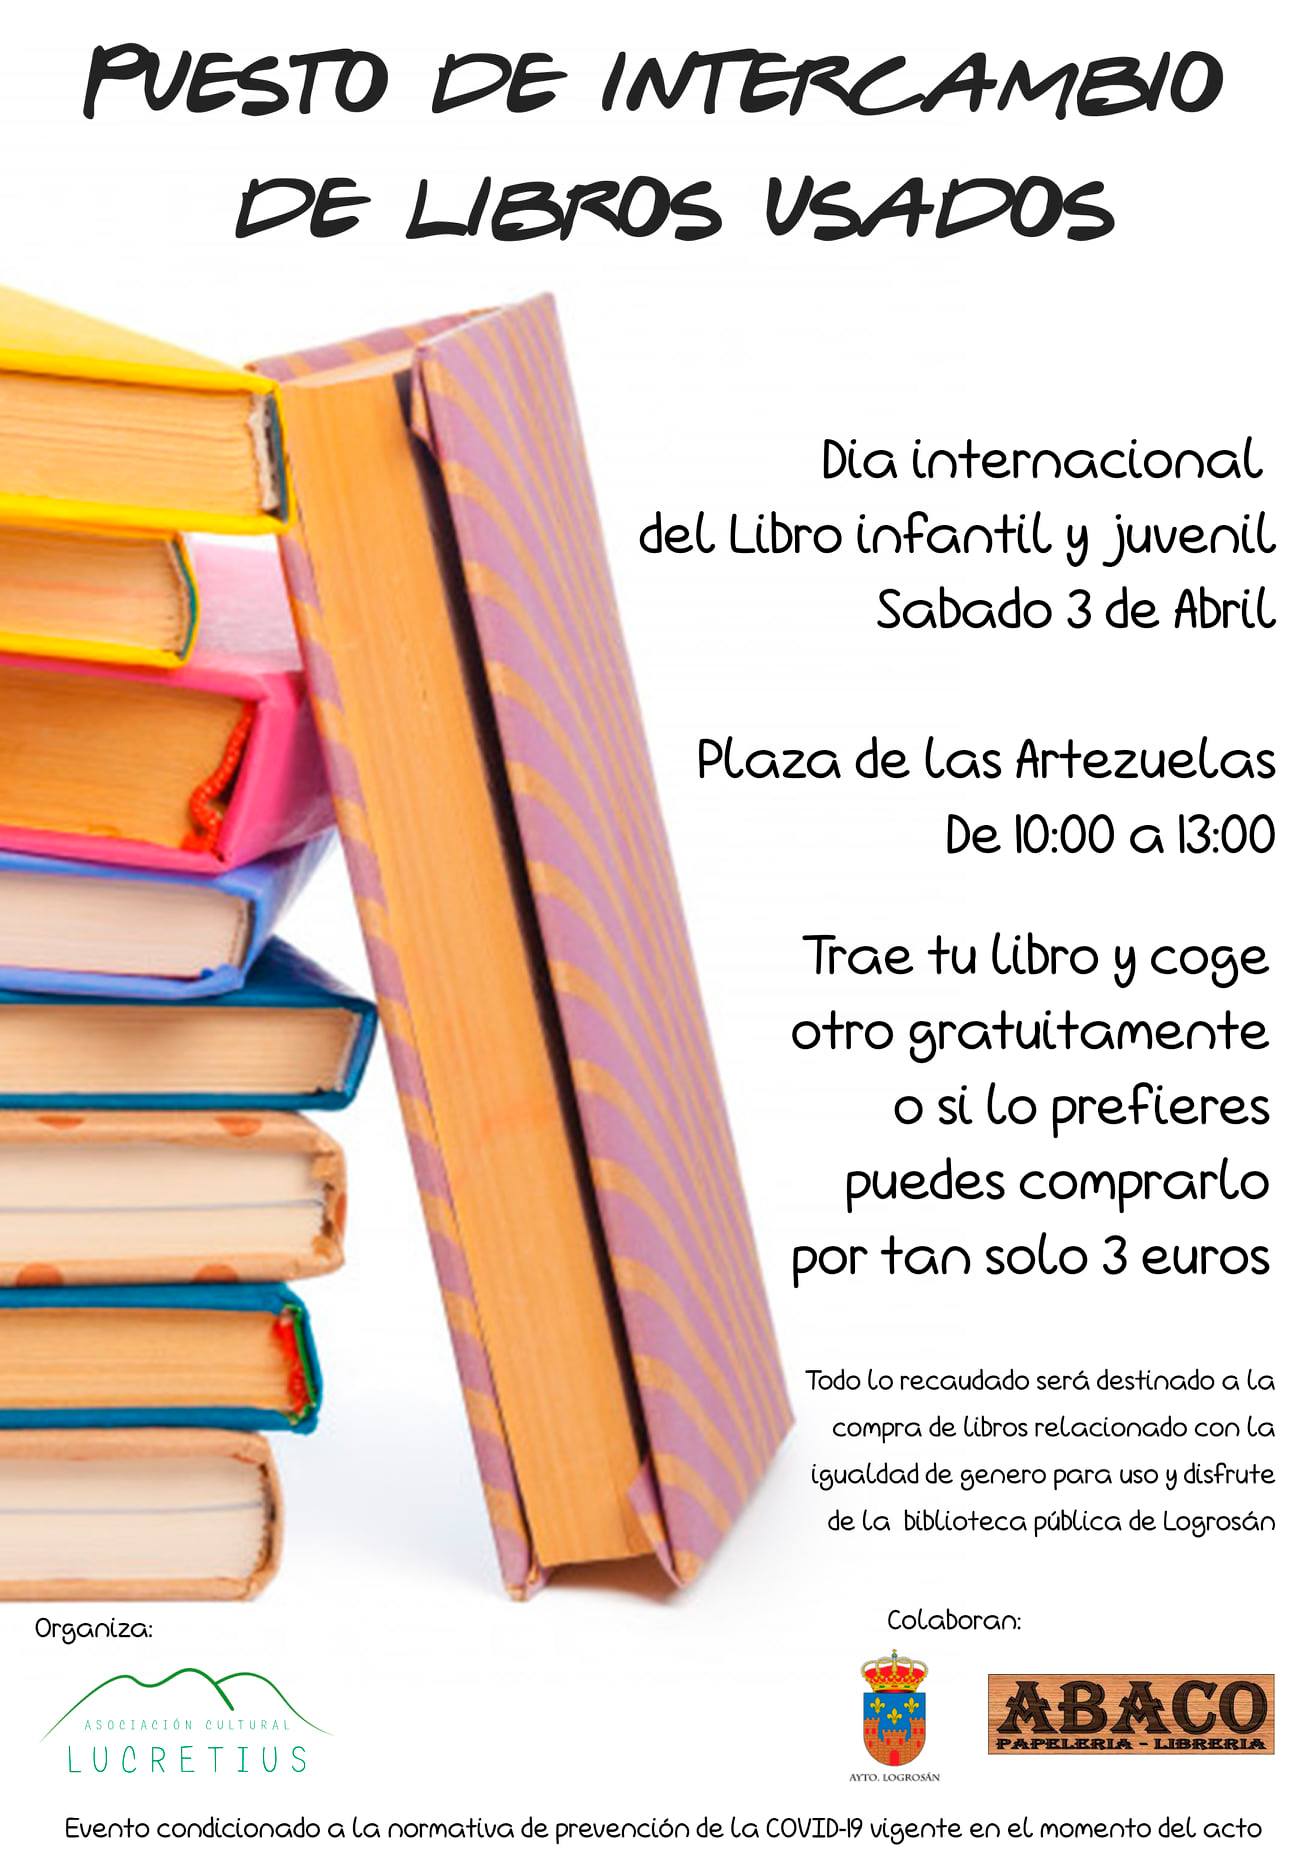 Puesto de intercambio de libros usados (2021) - Logrosán (Cáceres)